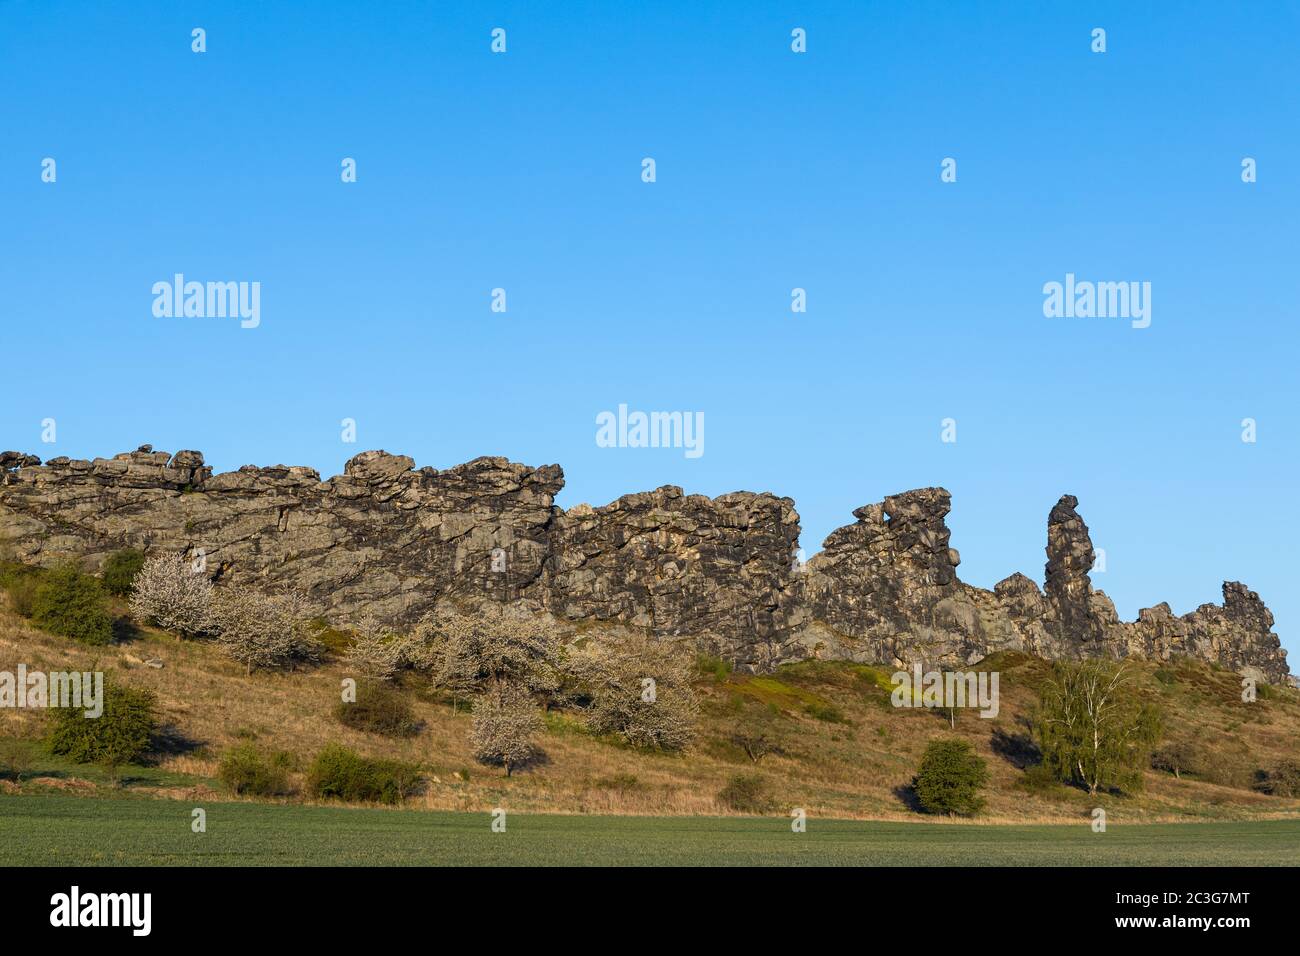 Teufelsmauer Harz rock formations Excursion destination visitor magnet Stock Photo